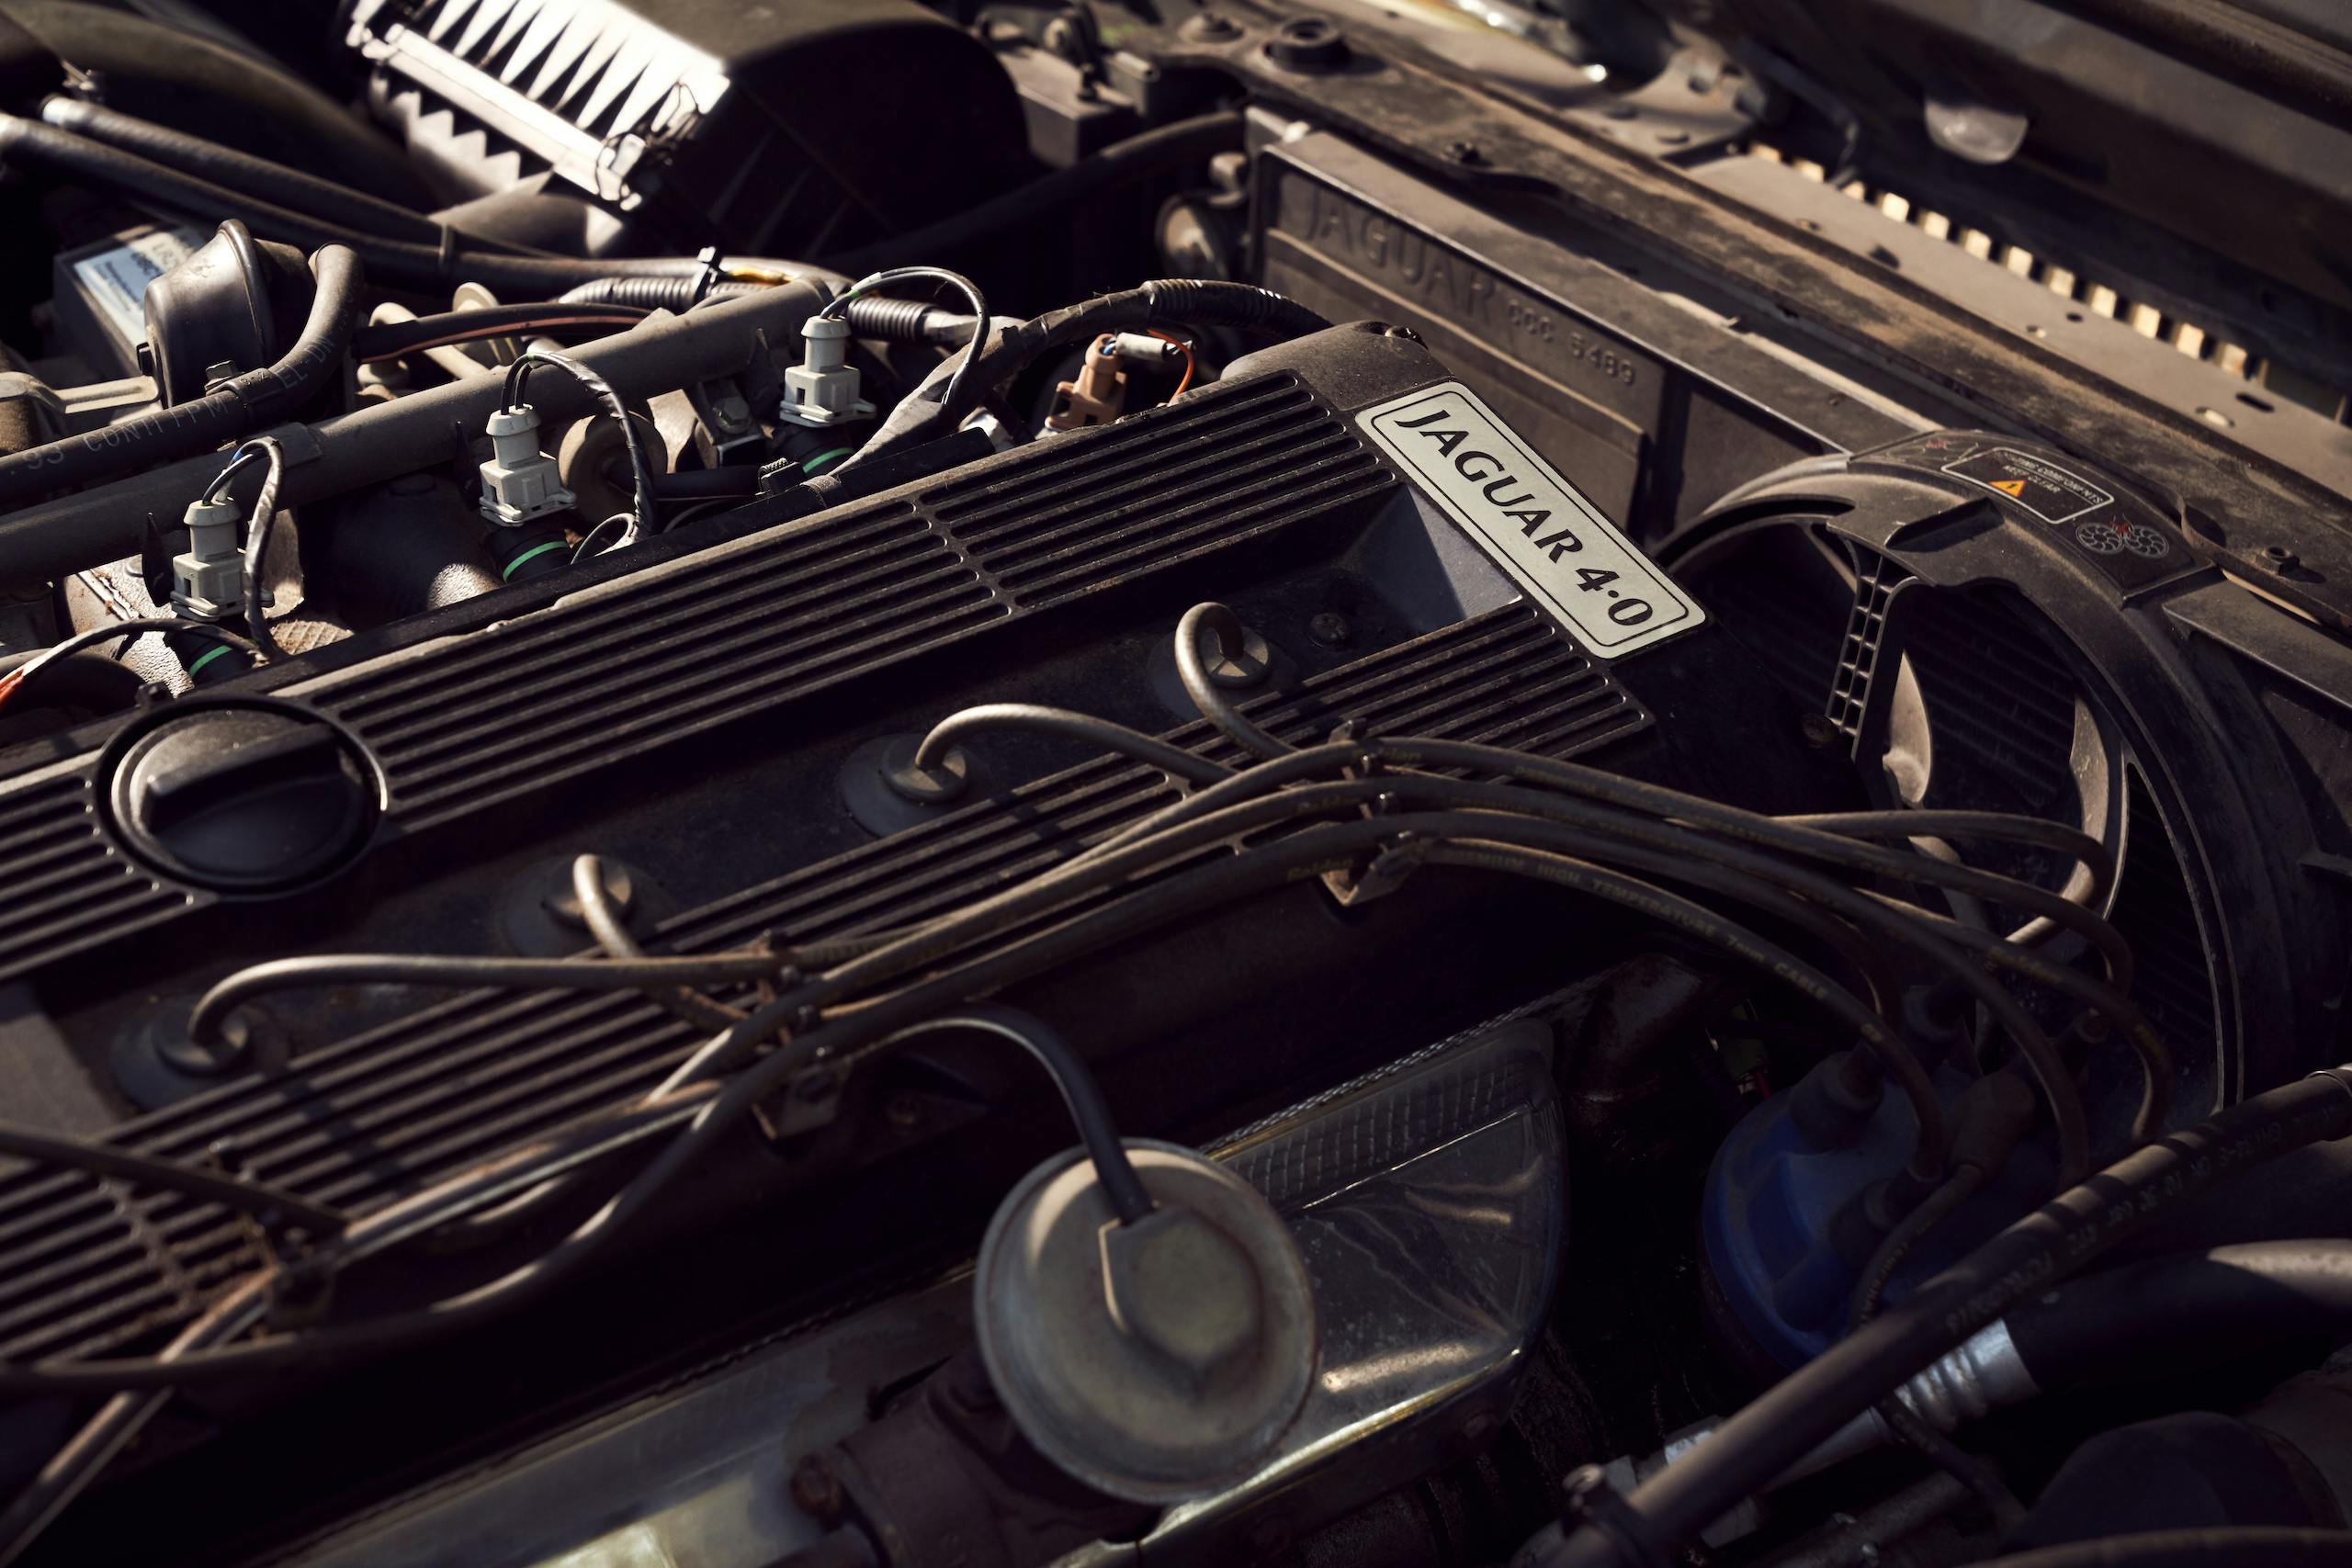 Jaguar XJ6 engine